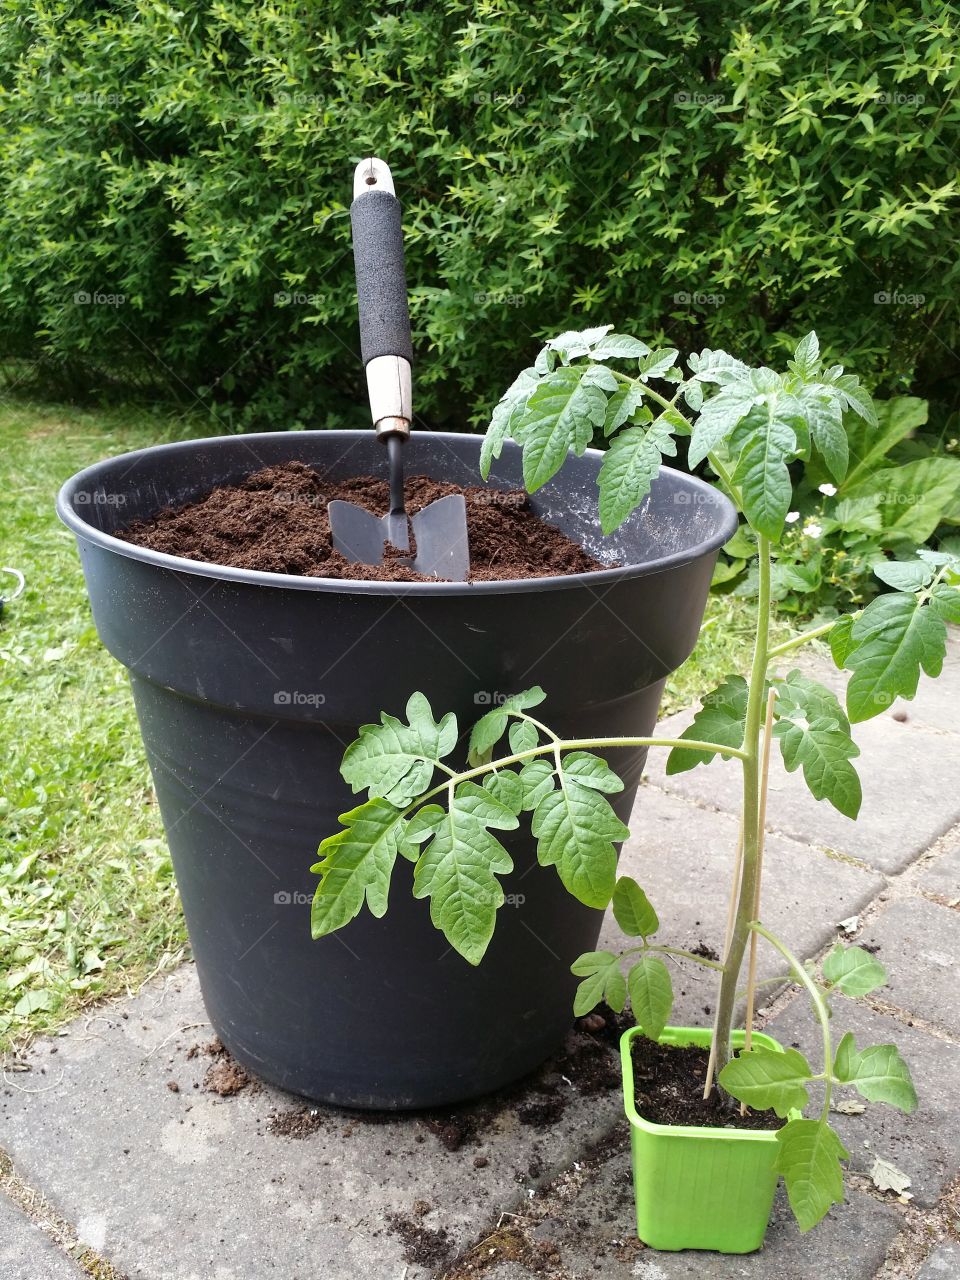 Gardening - Planting tomatoes